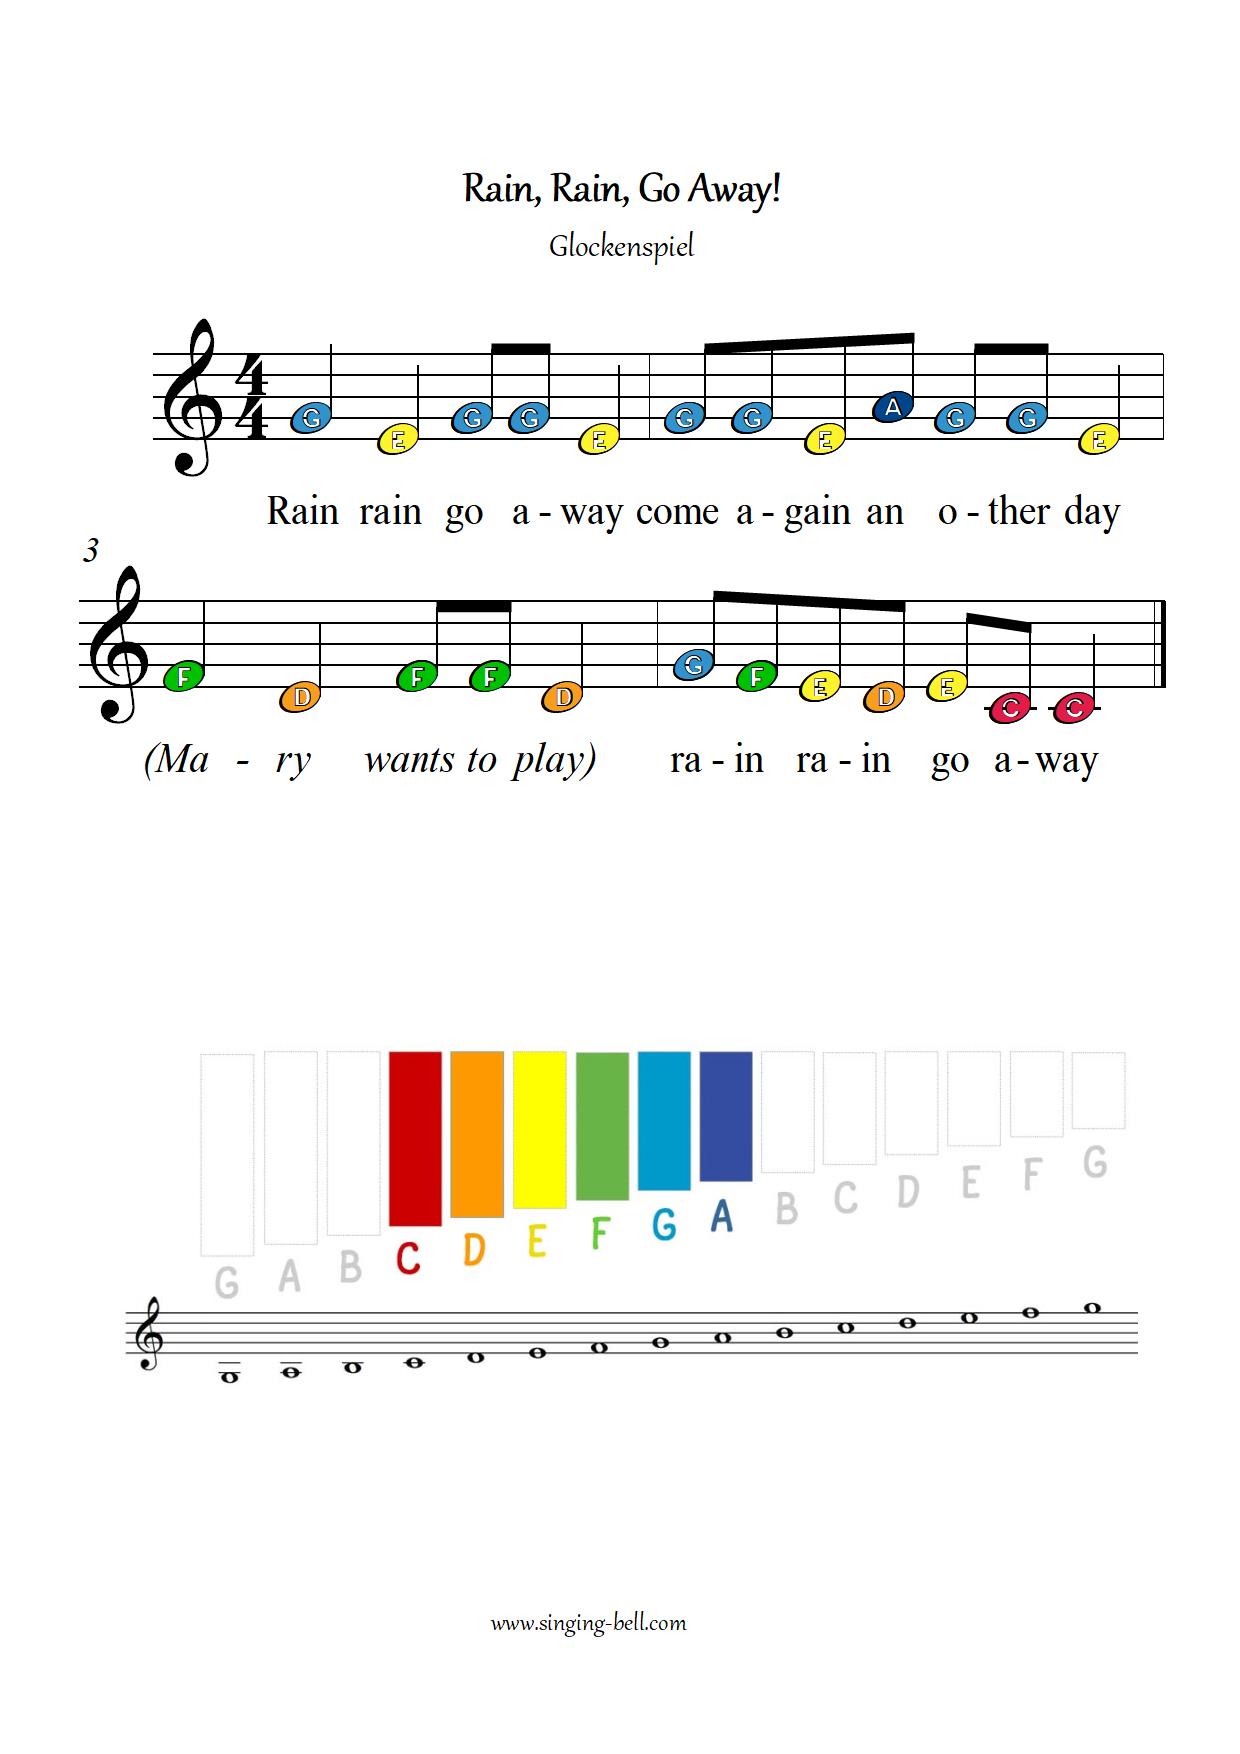 Rain-Rain Go Away free xylophone glockenspiel sheet music color notes chart pdf